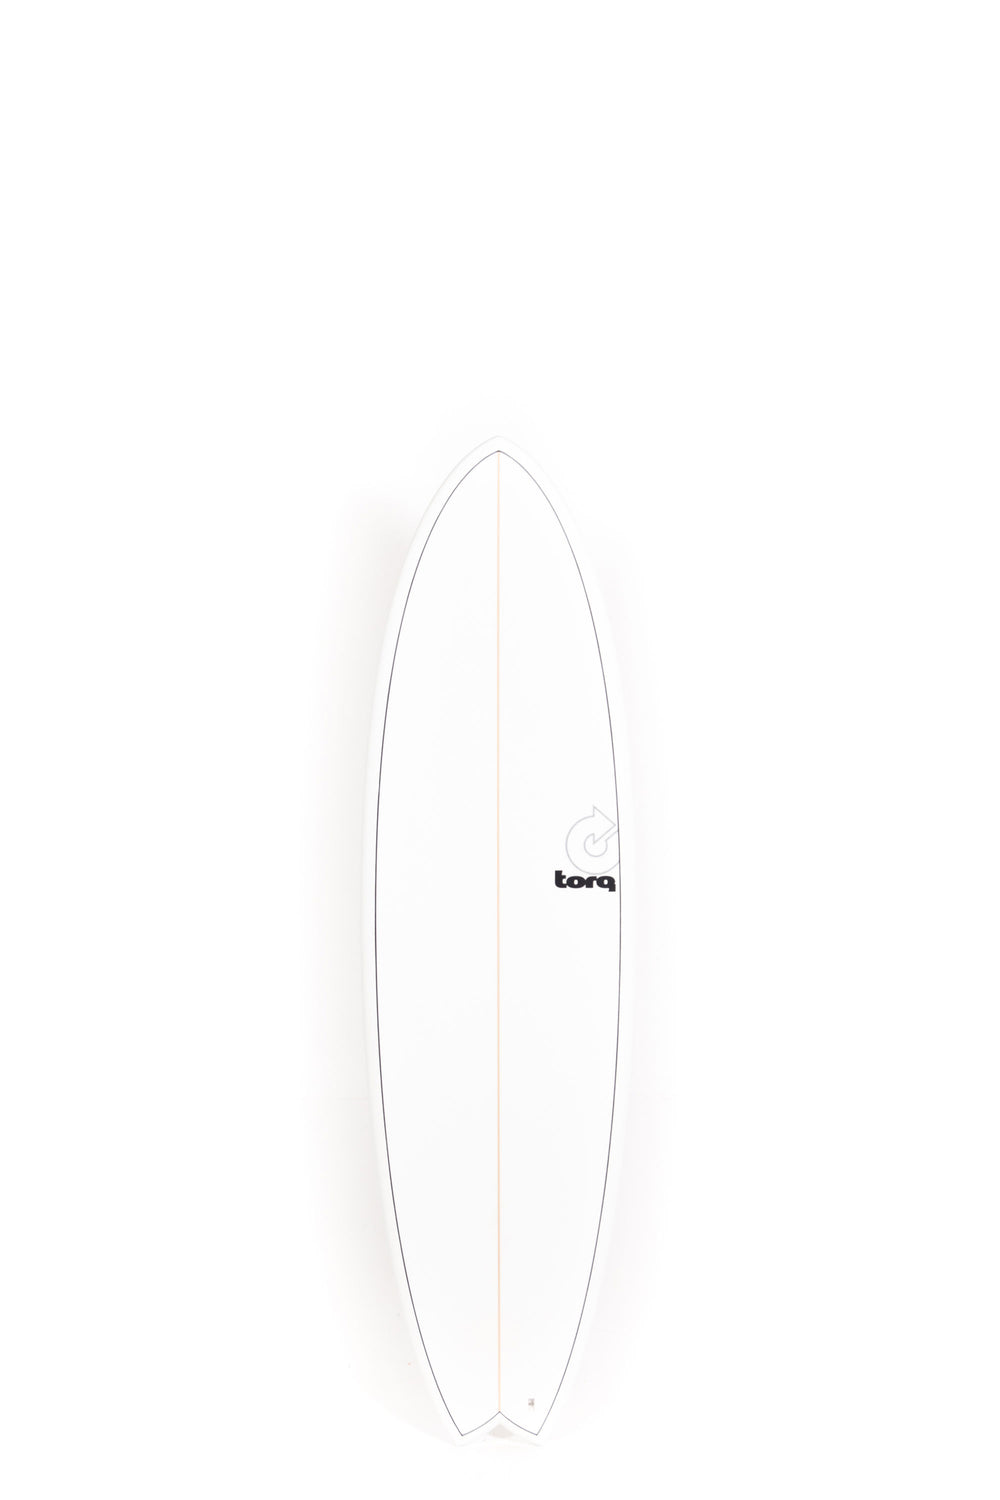 Torq Surfboards - MODFISH - 6'3